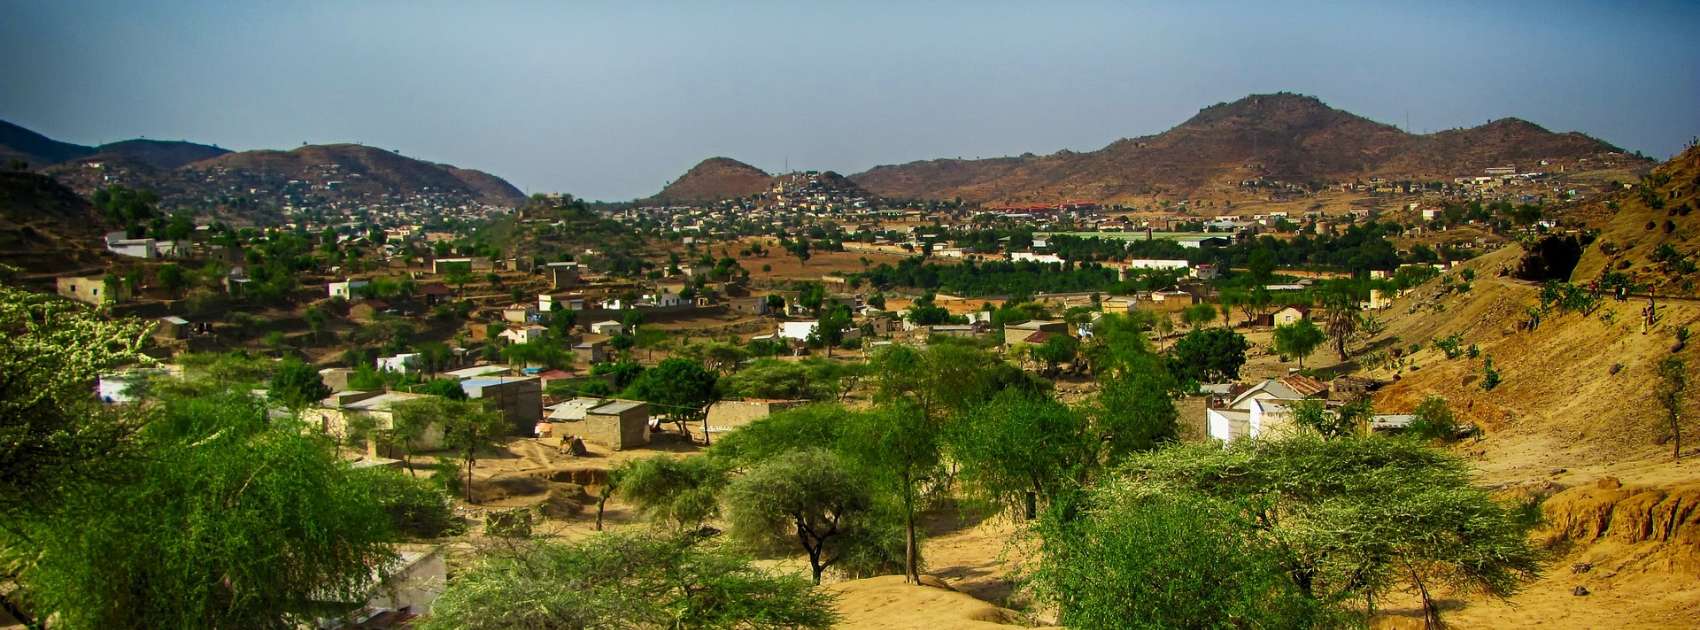 life scene in Eritrea